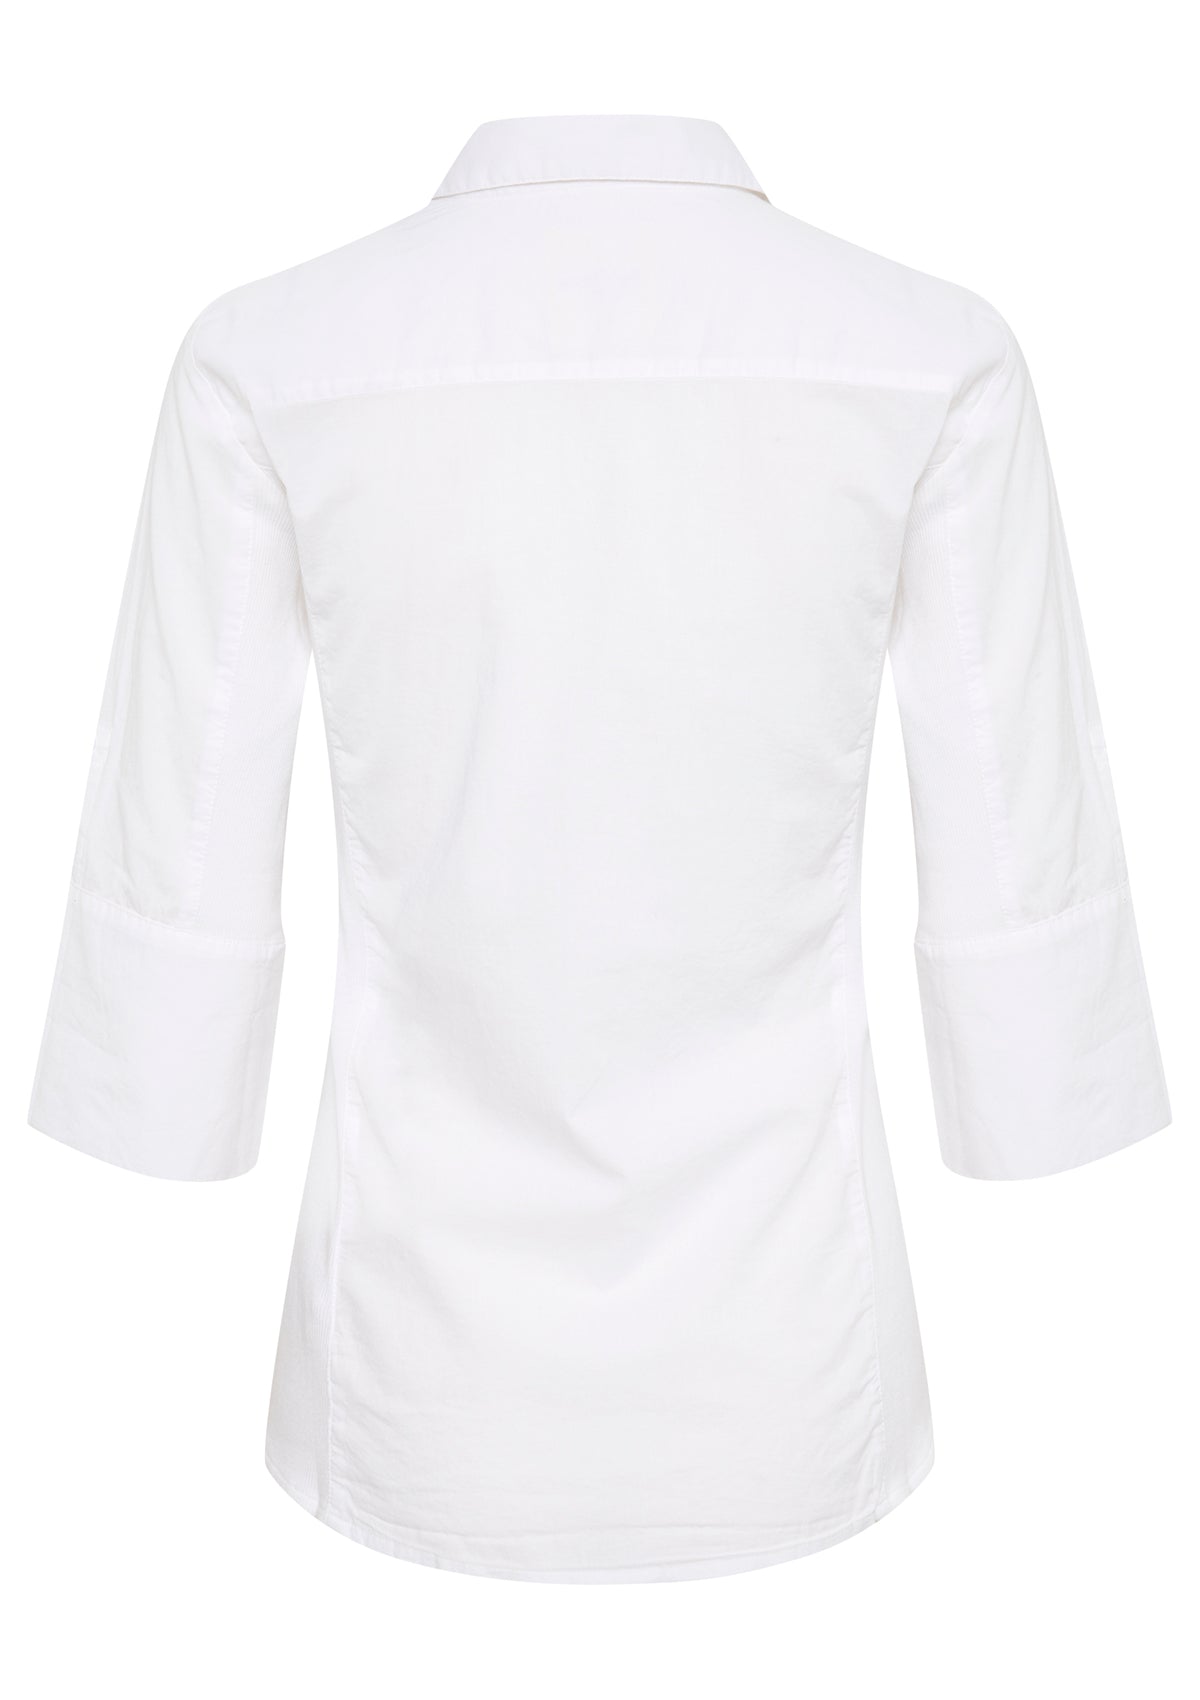 Part Two Cortnia Shirt White